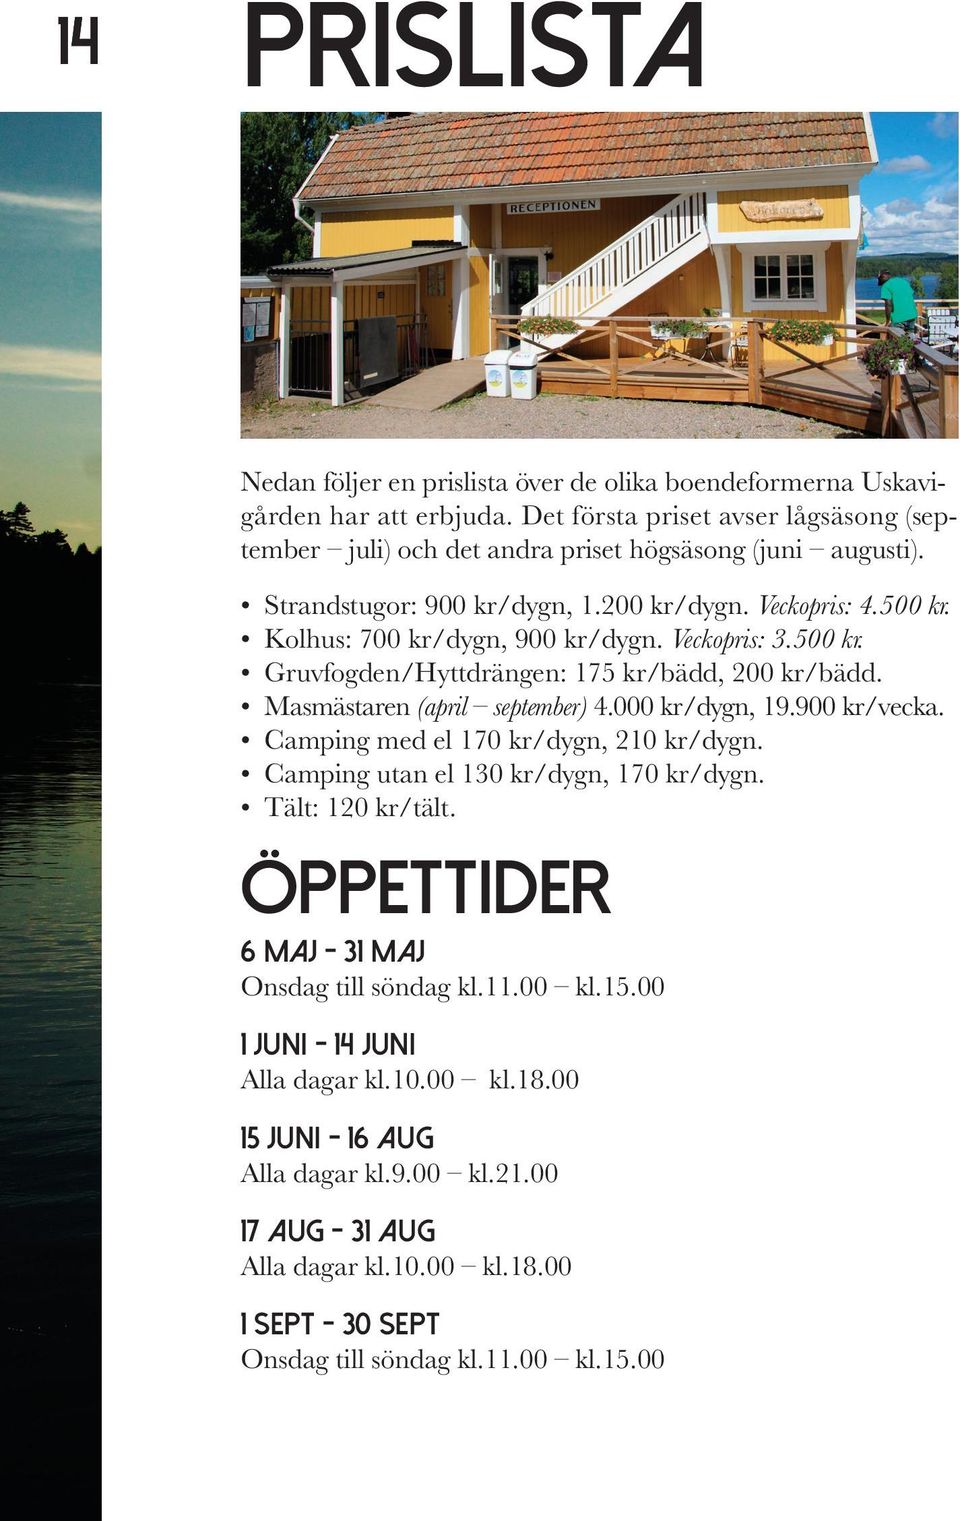 Masmästaren (april september) 4.000 kr/dygn, 19.900 kr/vecka. Camping med el 170 kr/dygn, 210 kr/dygn. Camping utan el 130 kr/dygn, 170 kr/dygn. Tält: 120 kr/tält.